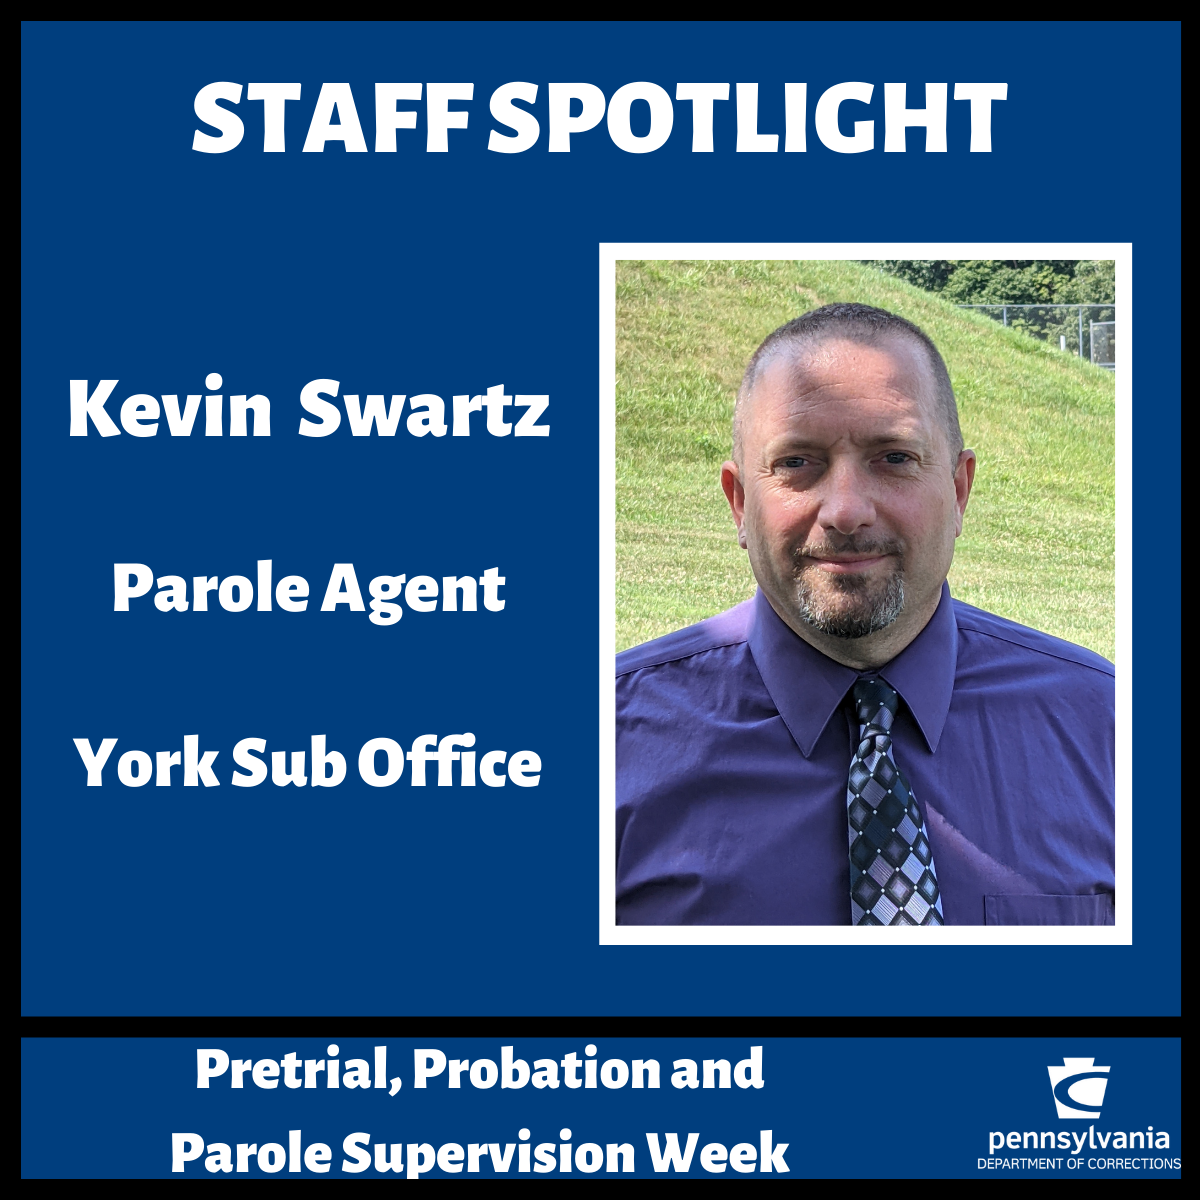 A graphic honoring Parole Agent Kevin Swartz